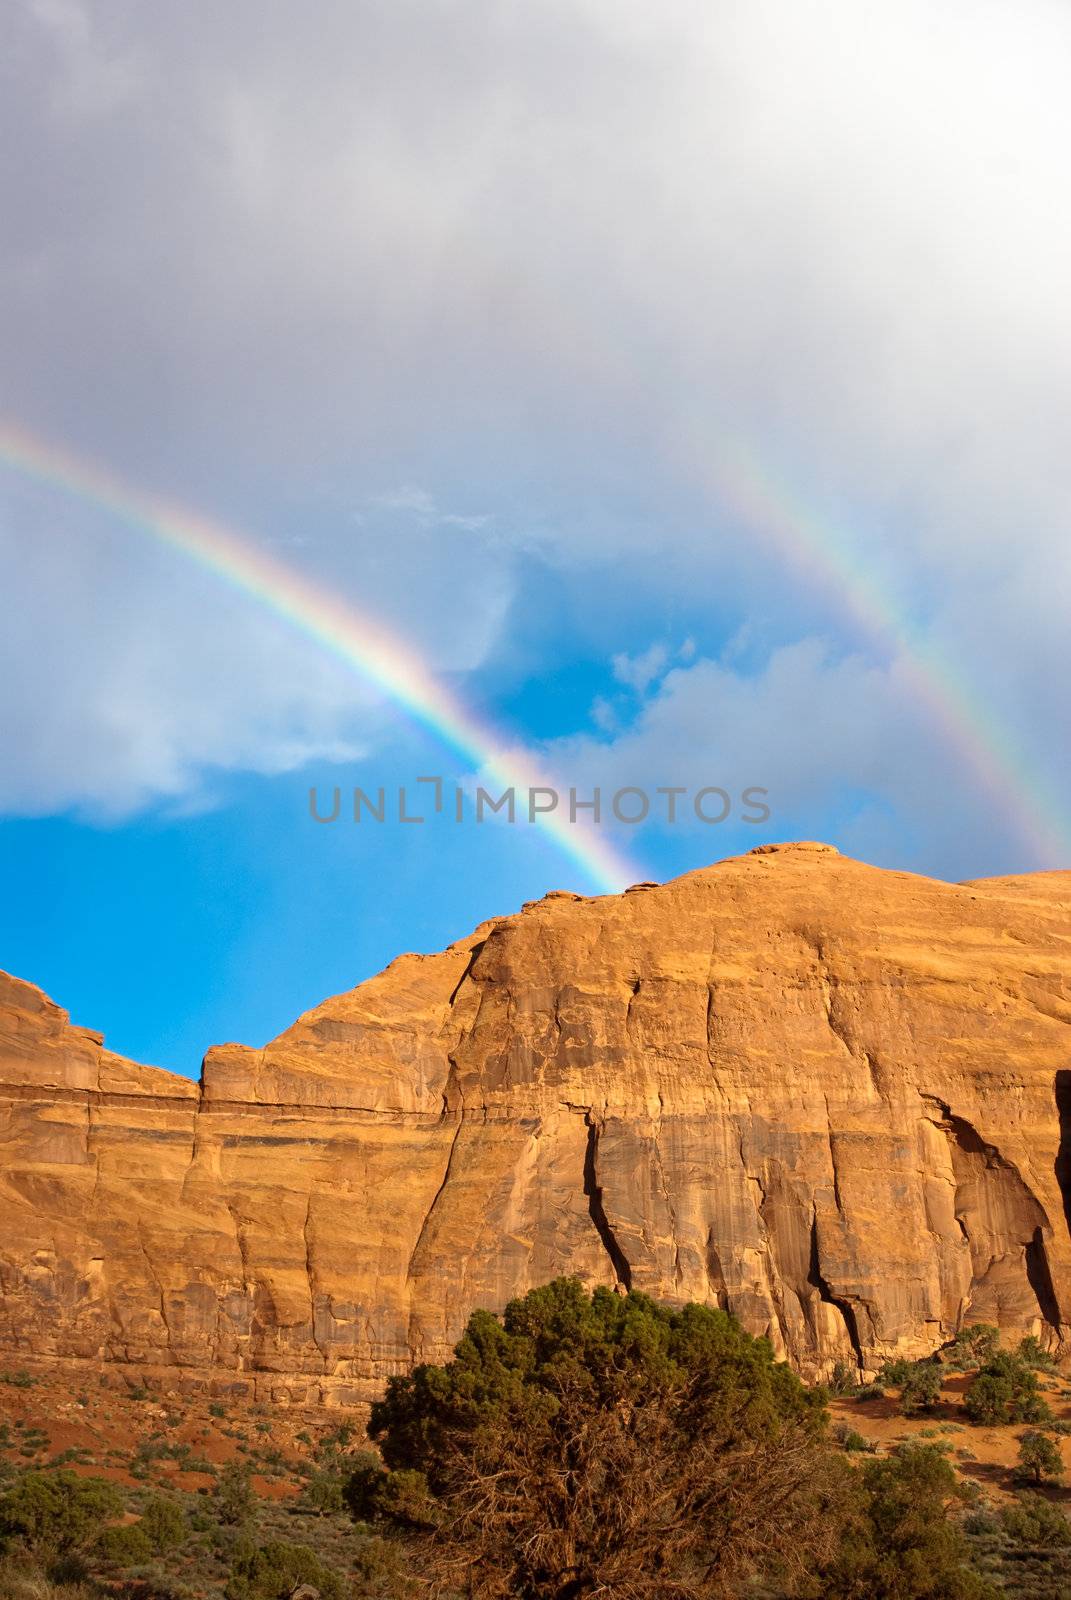 Double Rainbow over Monument Valley, Utah USA